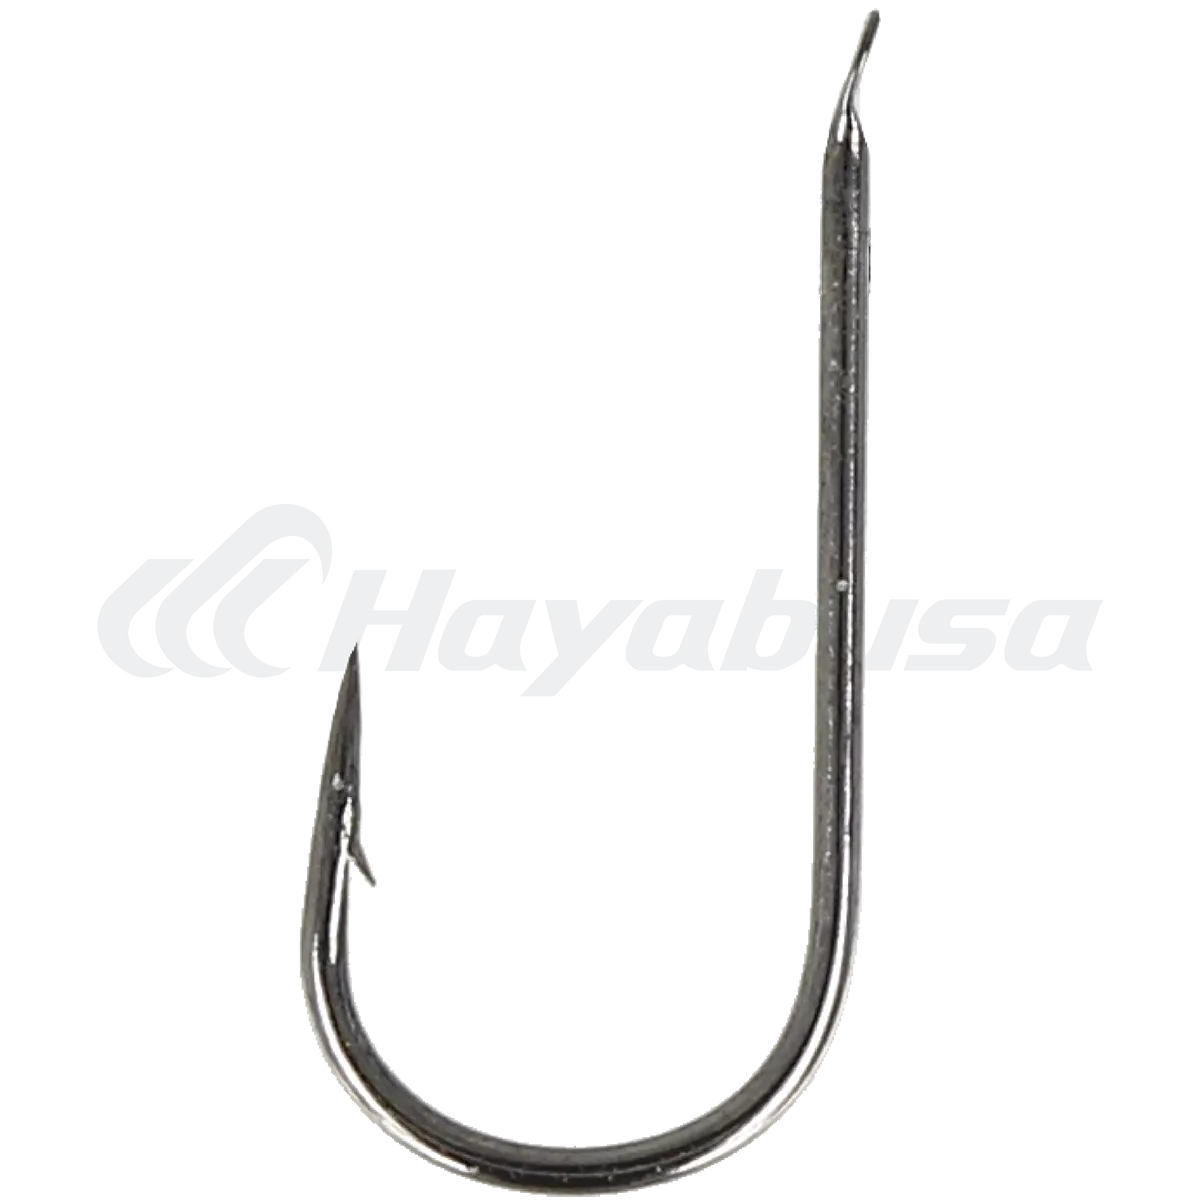 Крючок Hayabusa H.CHK128NI